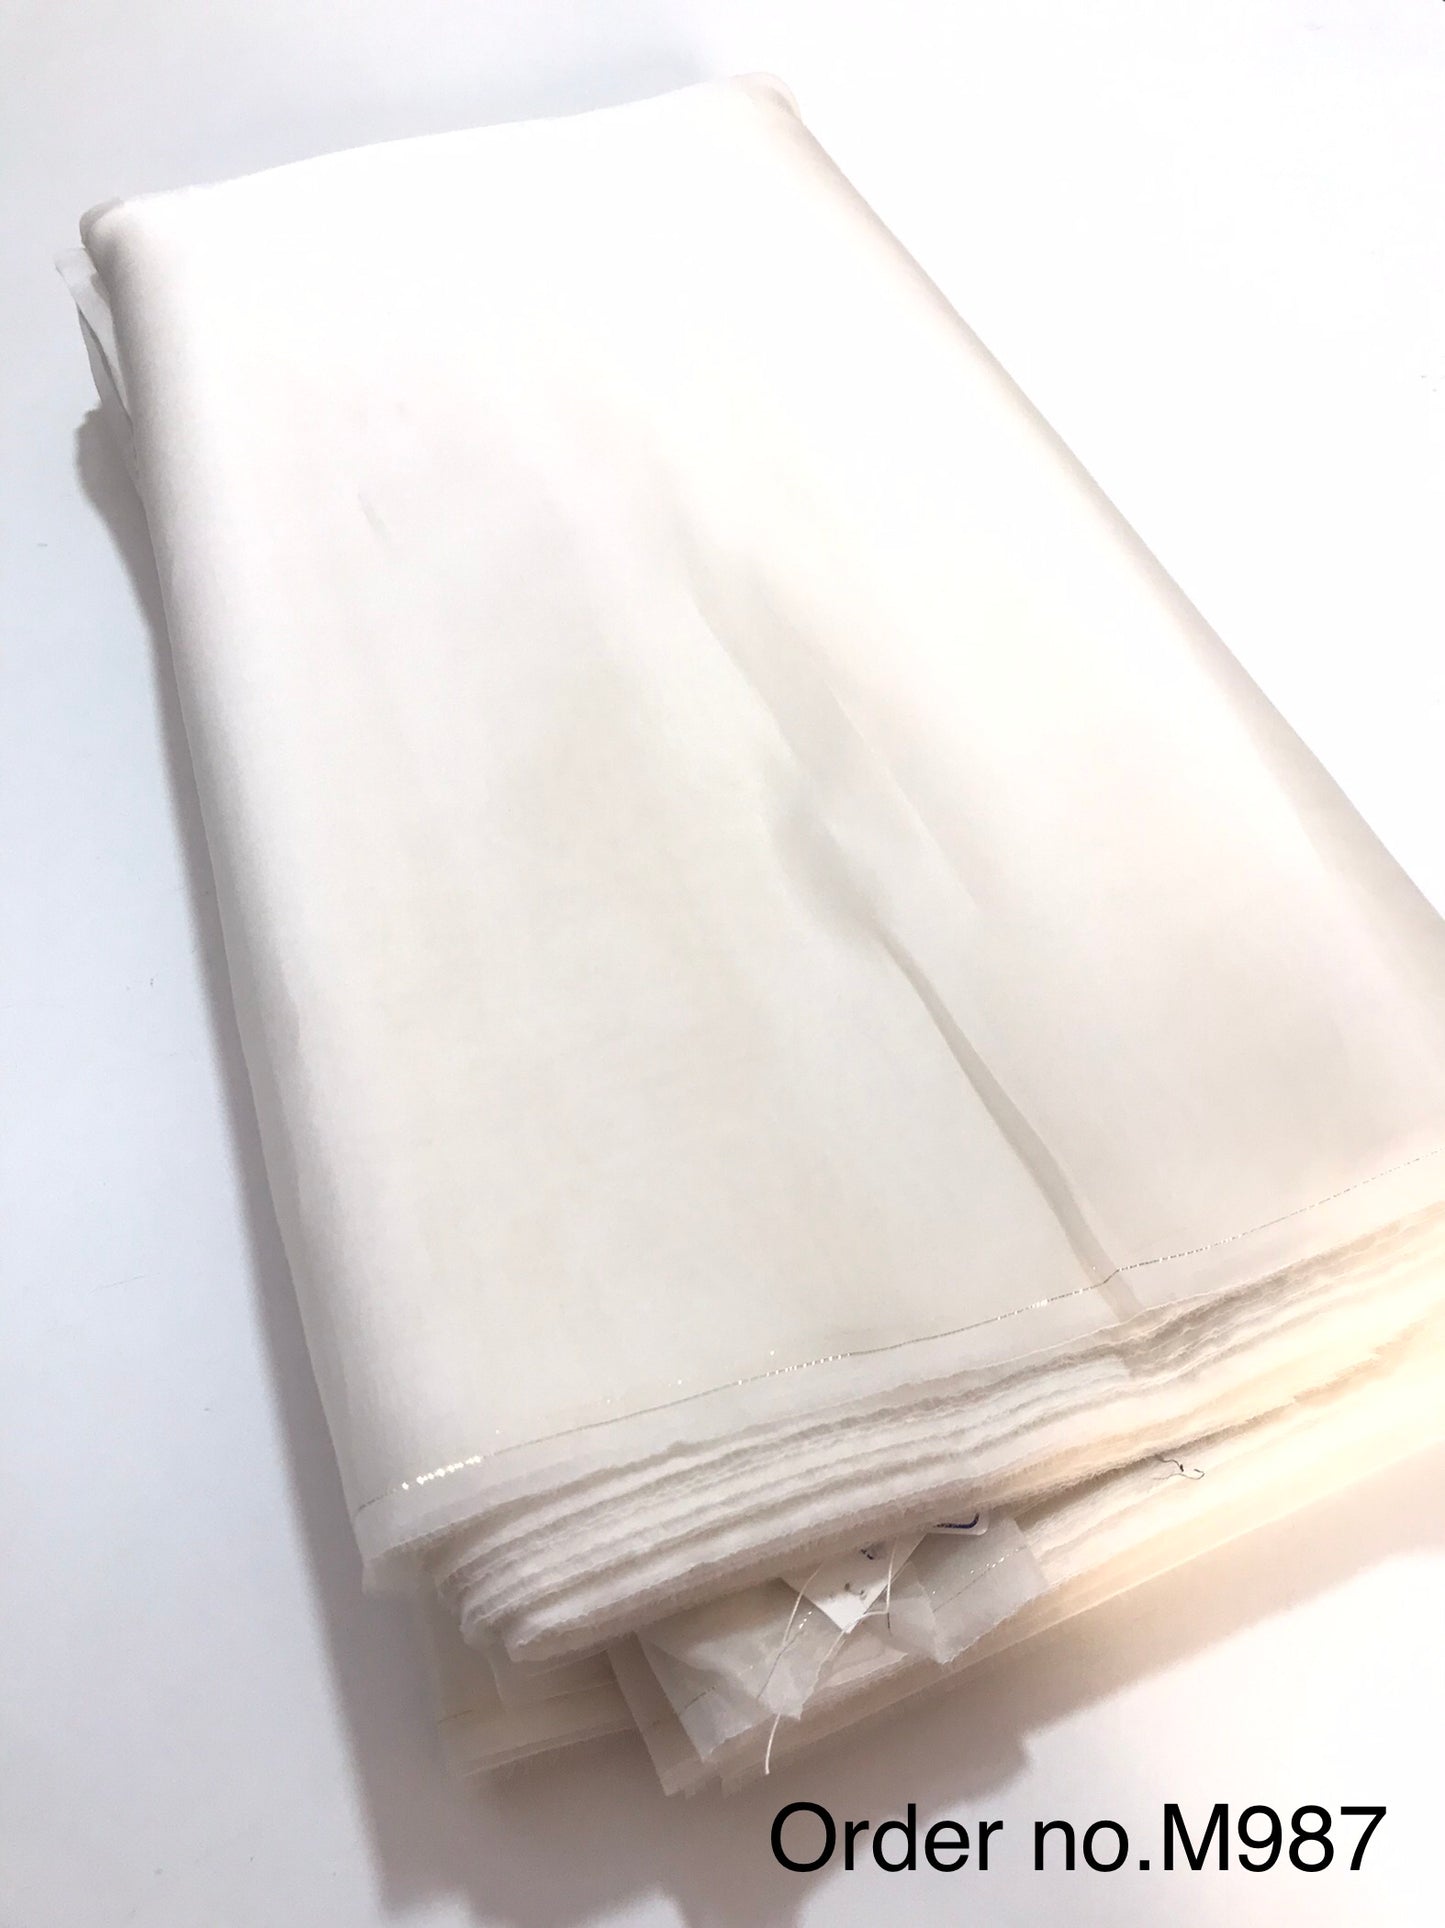 Silk satin organza 50gm width 44”